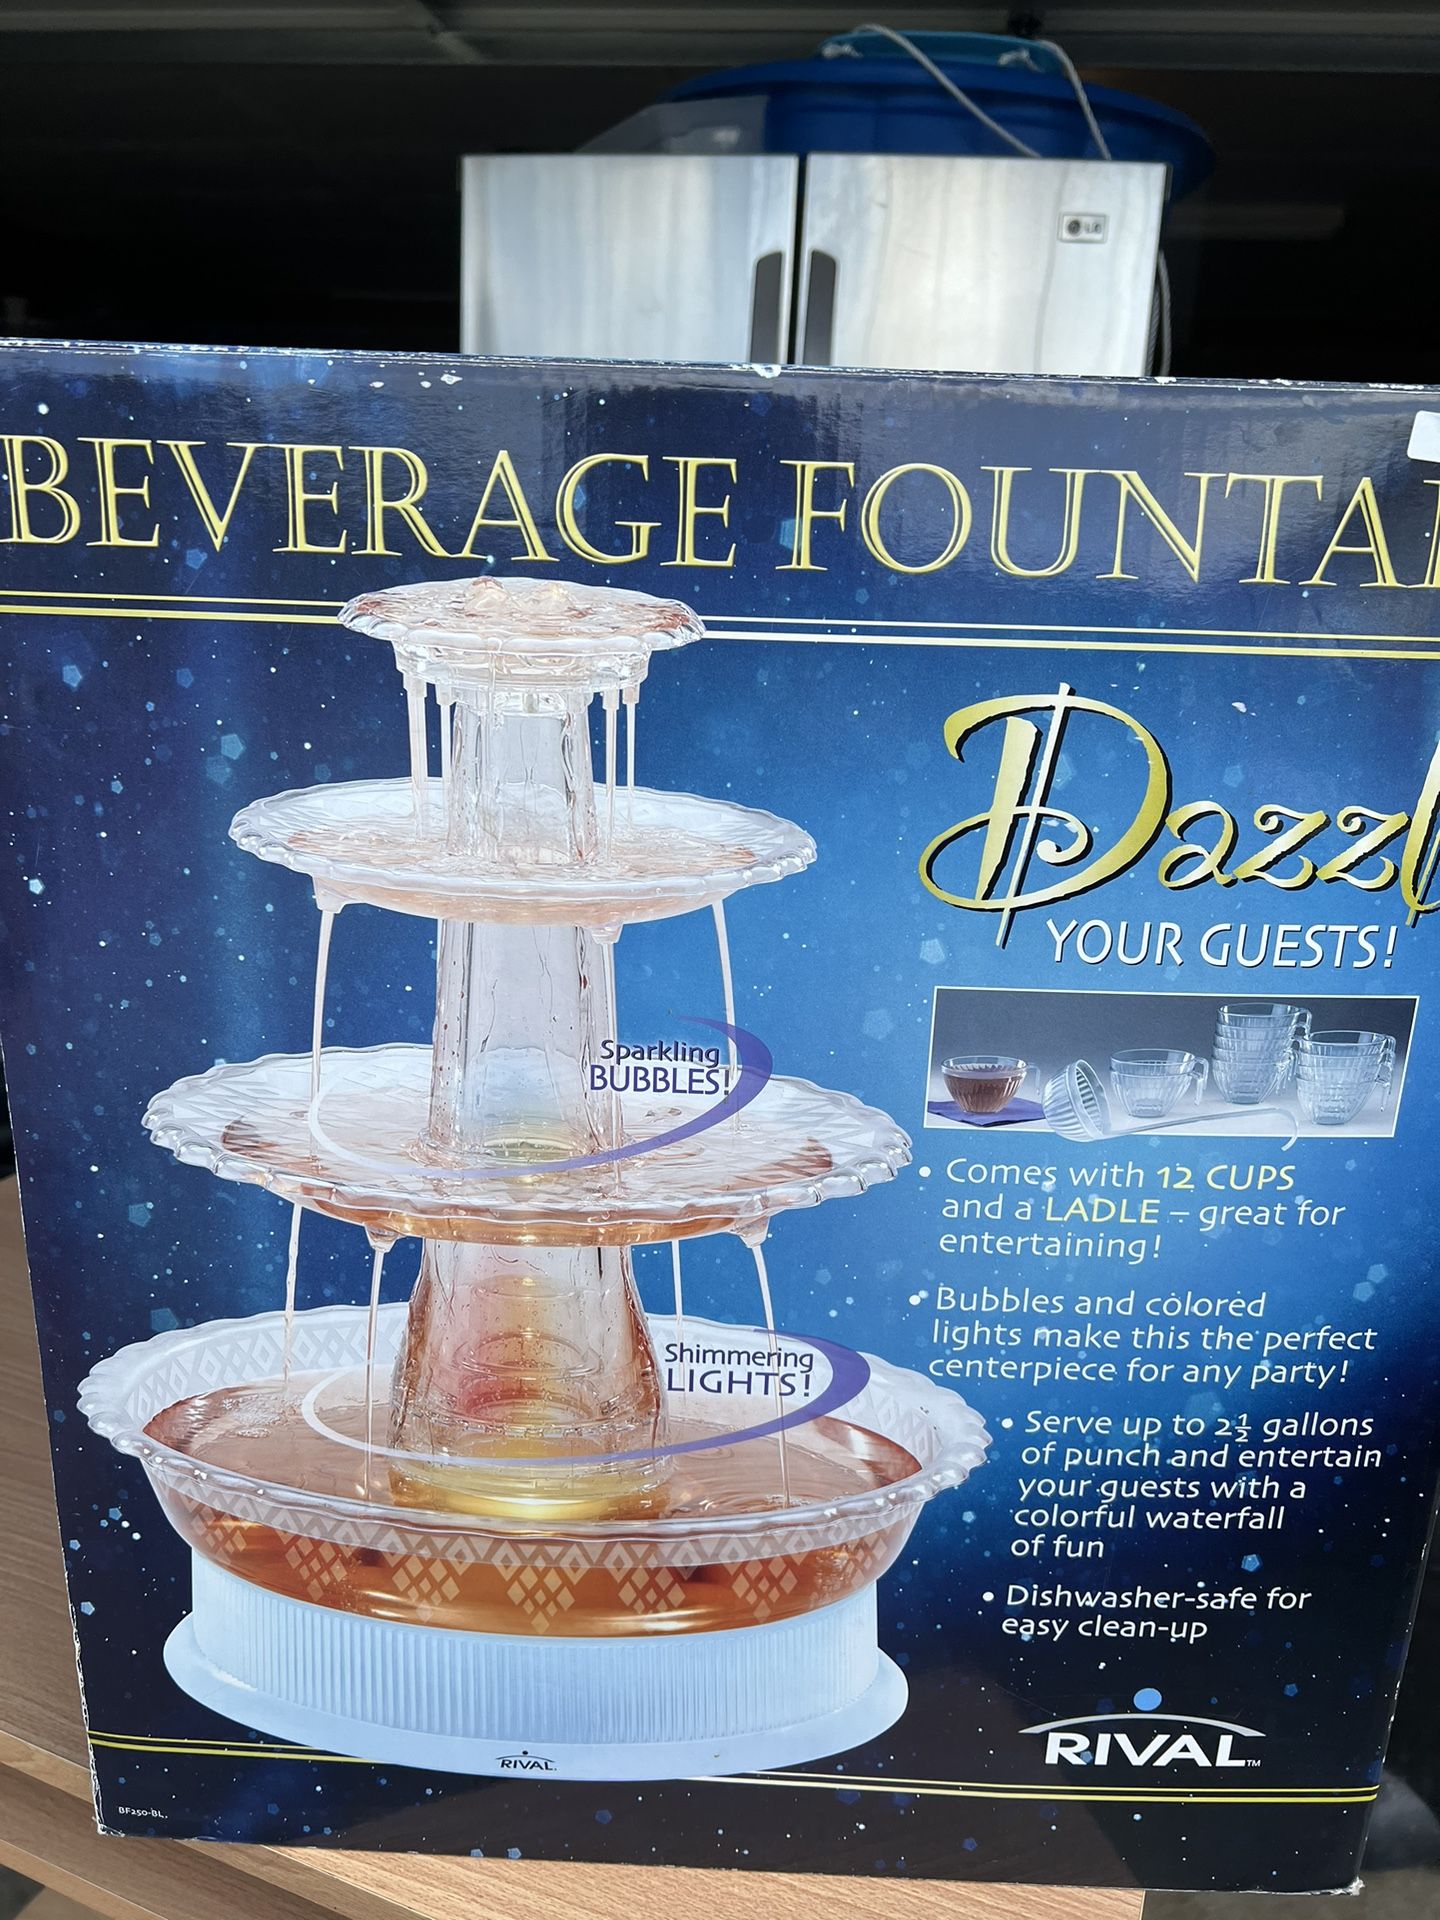 Beautiful Beverage Fountain 